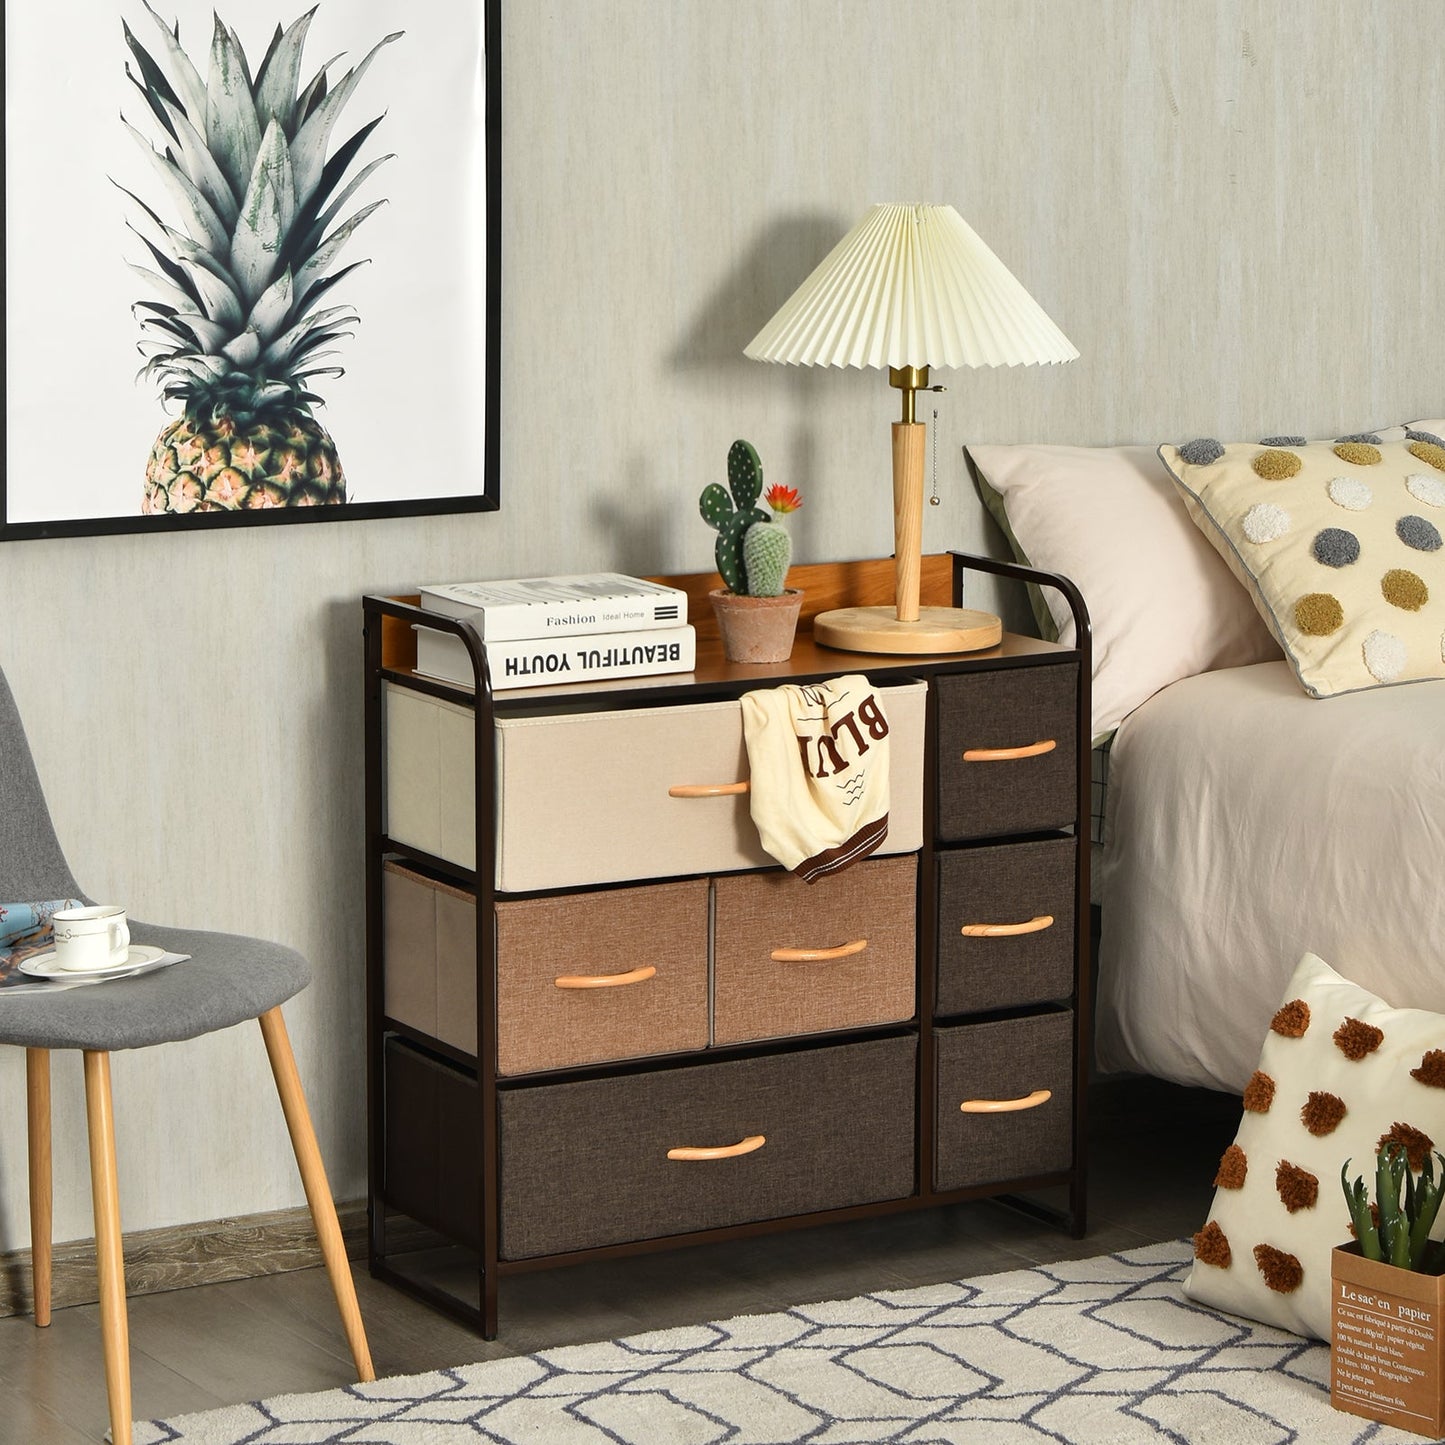 7-Drawer Dresser with Wooden Top for Bedroom Hallway